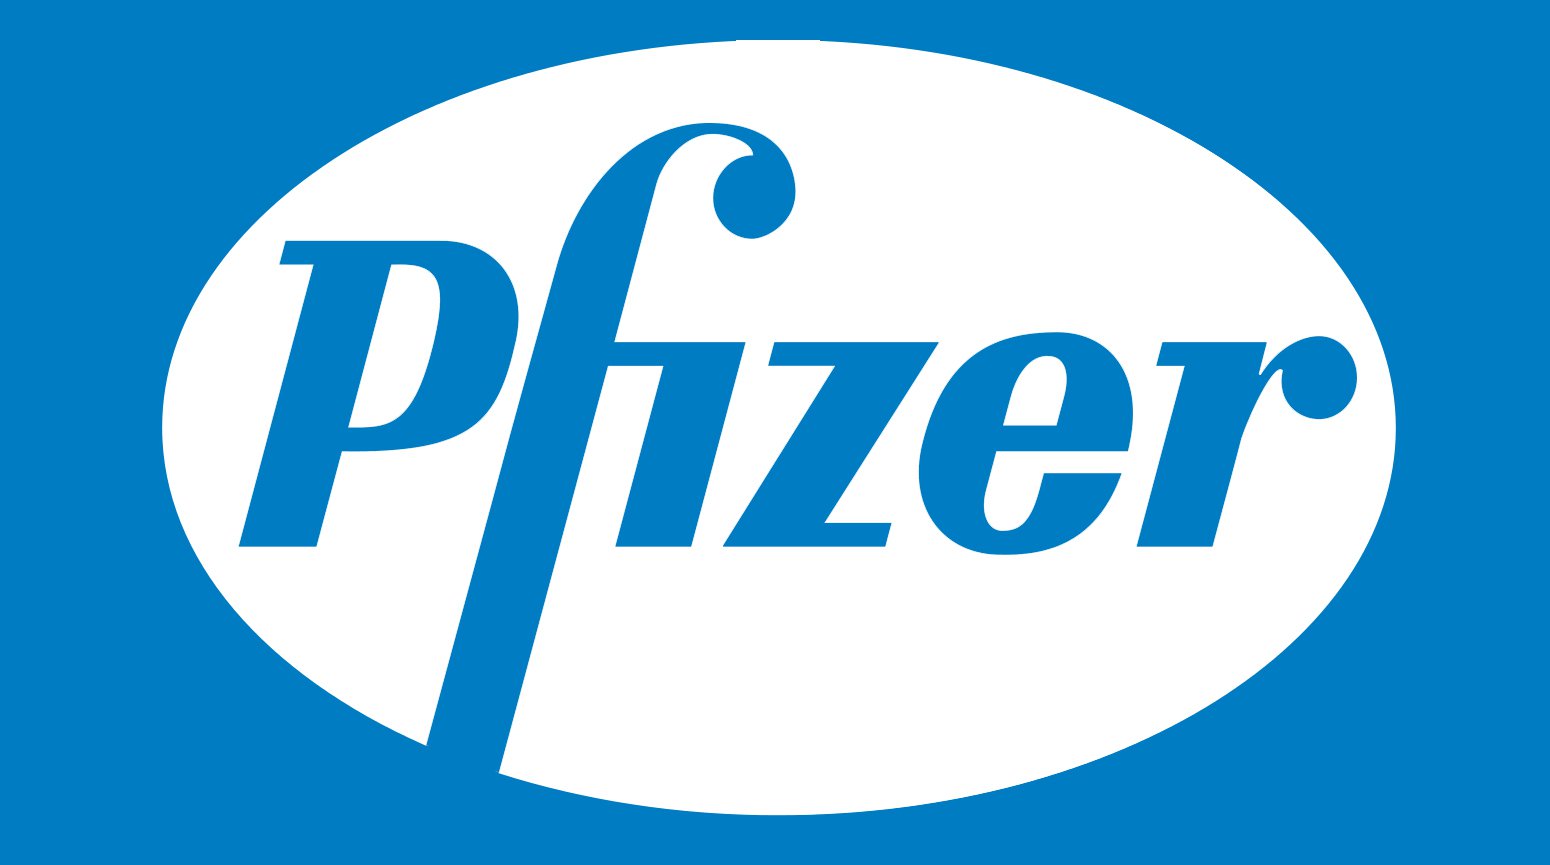  Pfizer Logo Pfizer Symbol Meaning History And Evolution